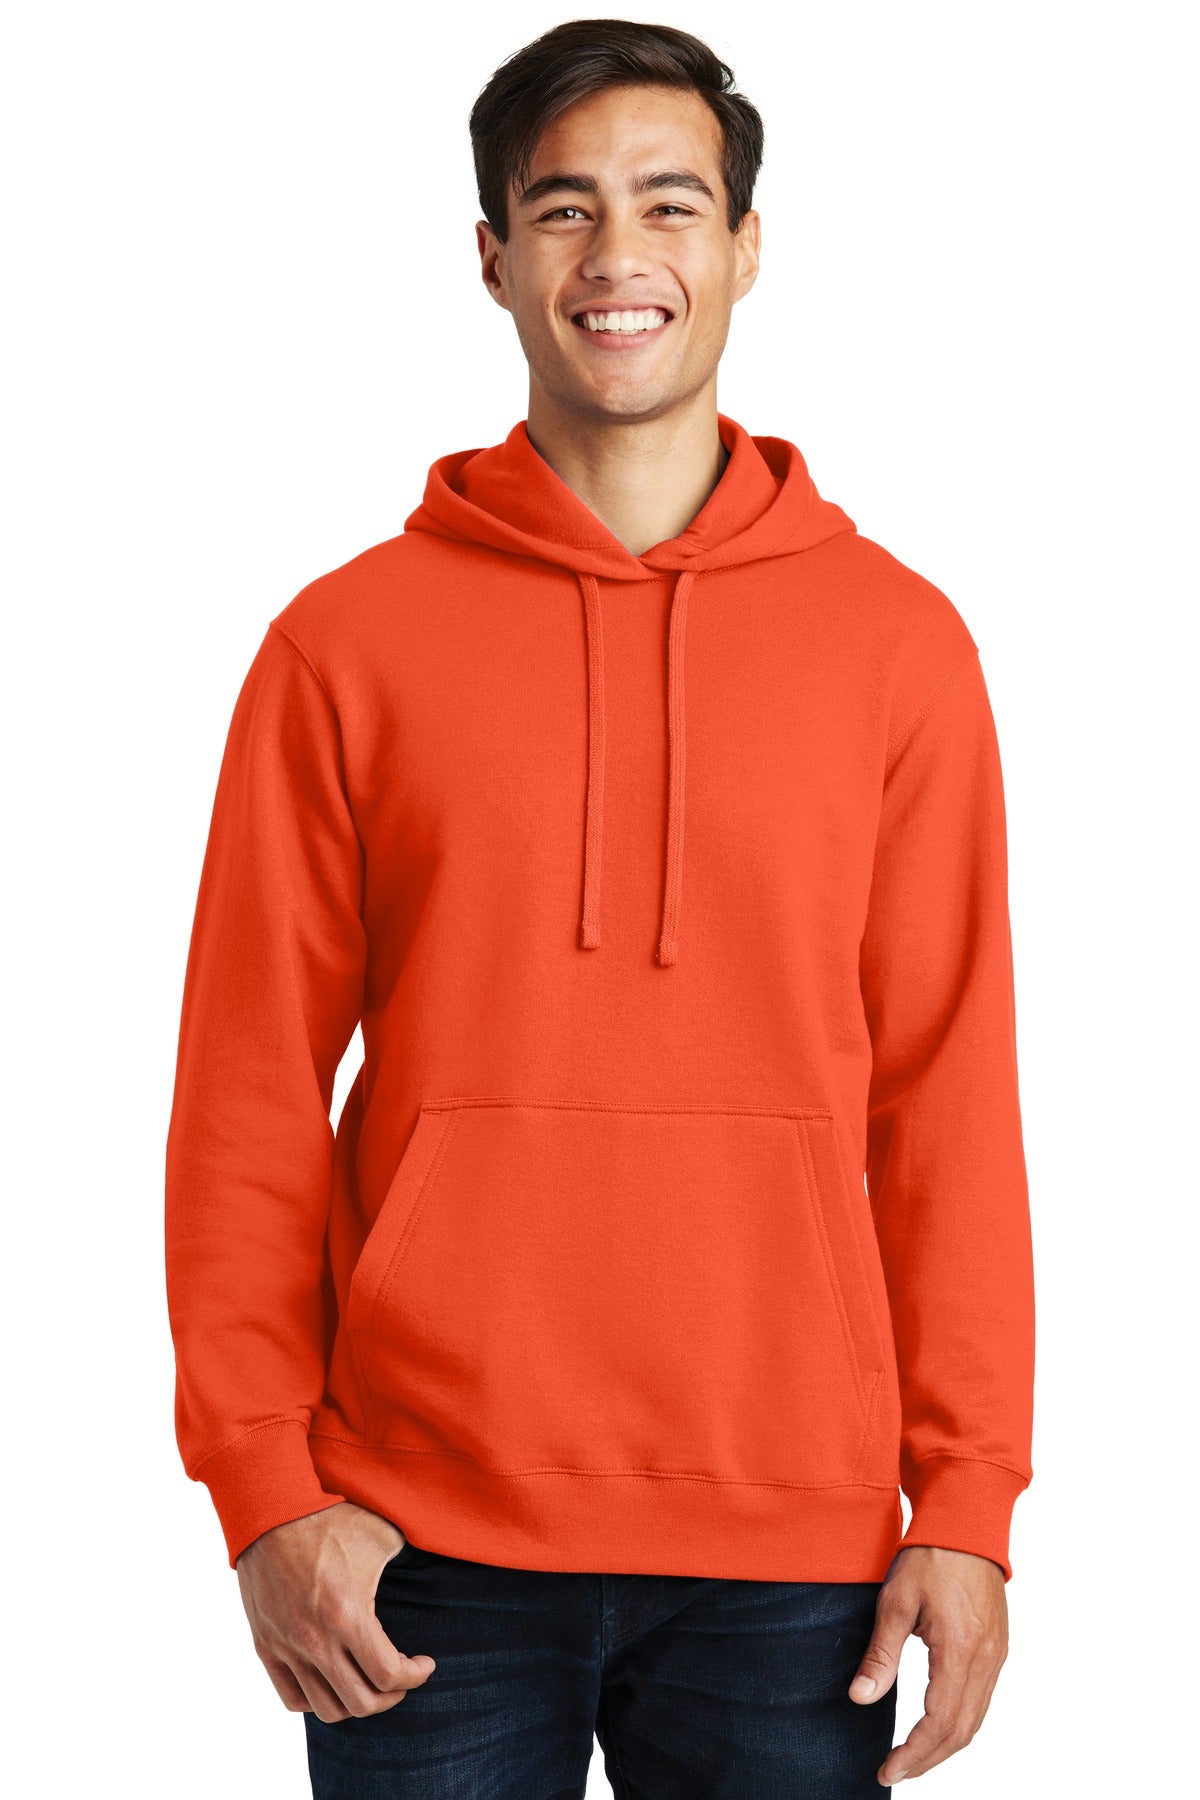 Photo of Port & Company Sweatshirts/Fleece PC850H  color  Orange